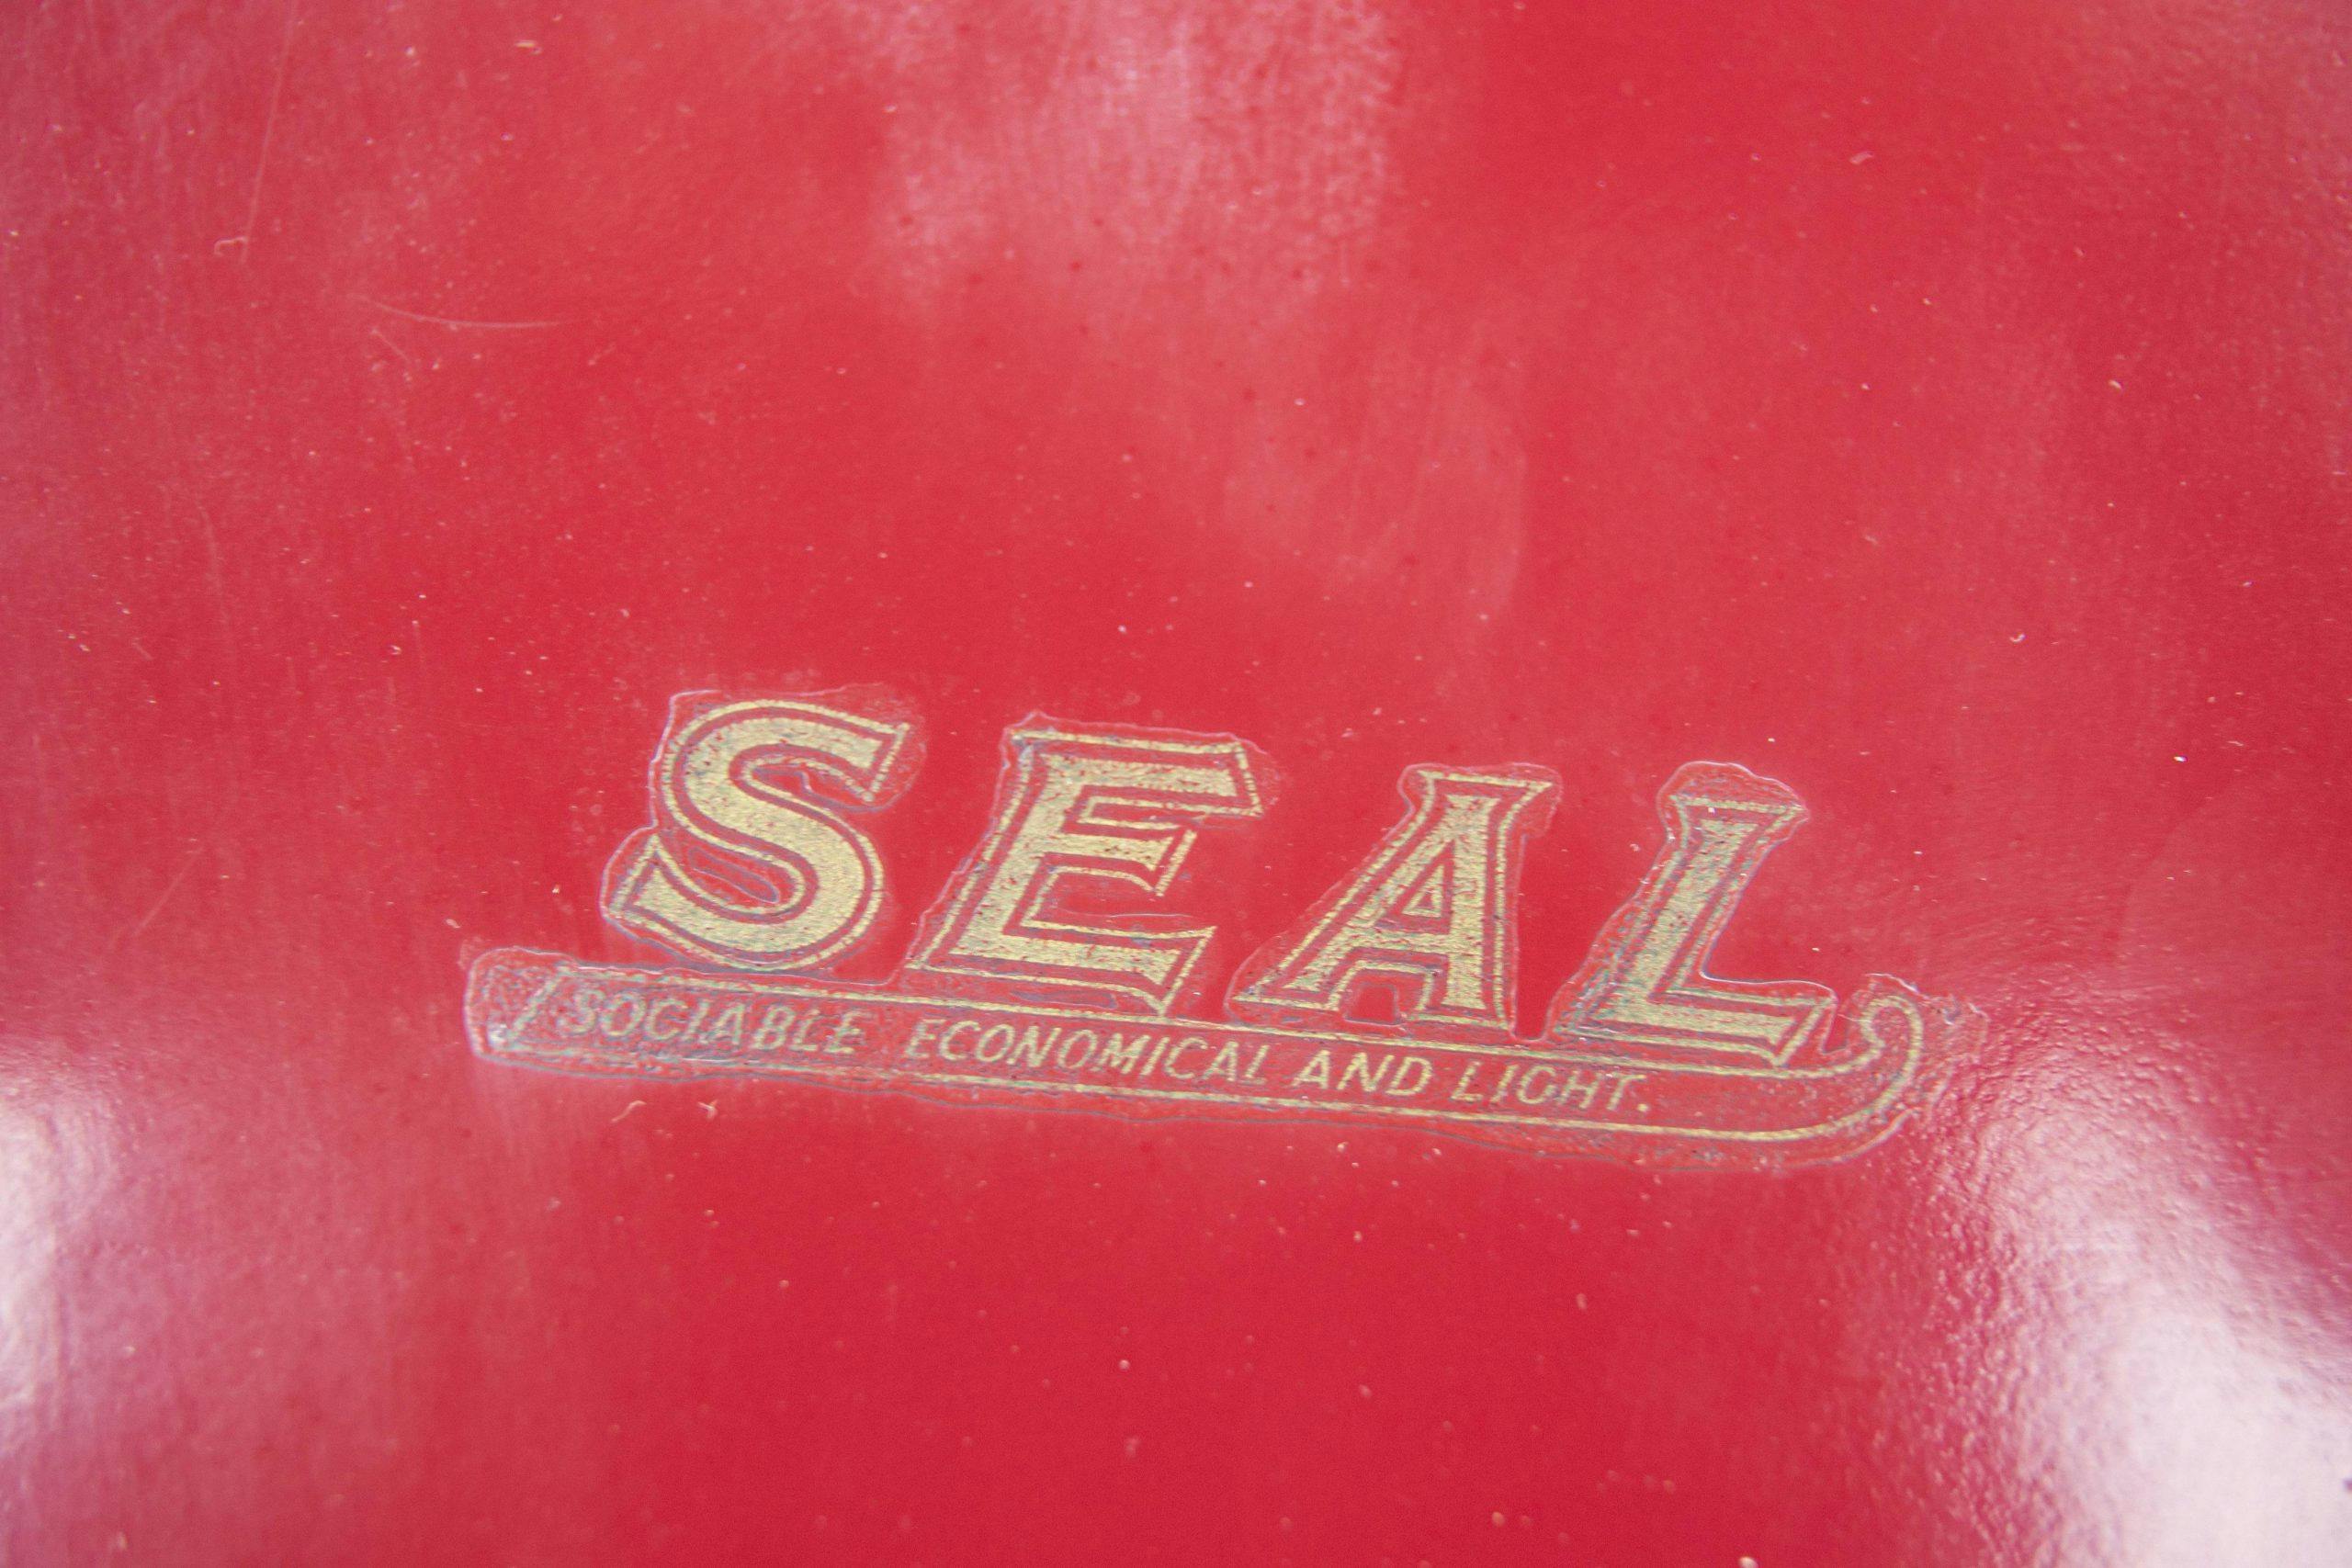 1925 Seal 980CC Motorcycle badge